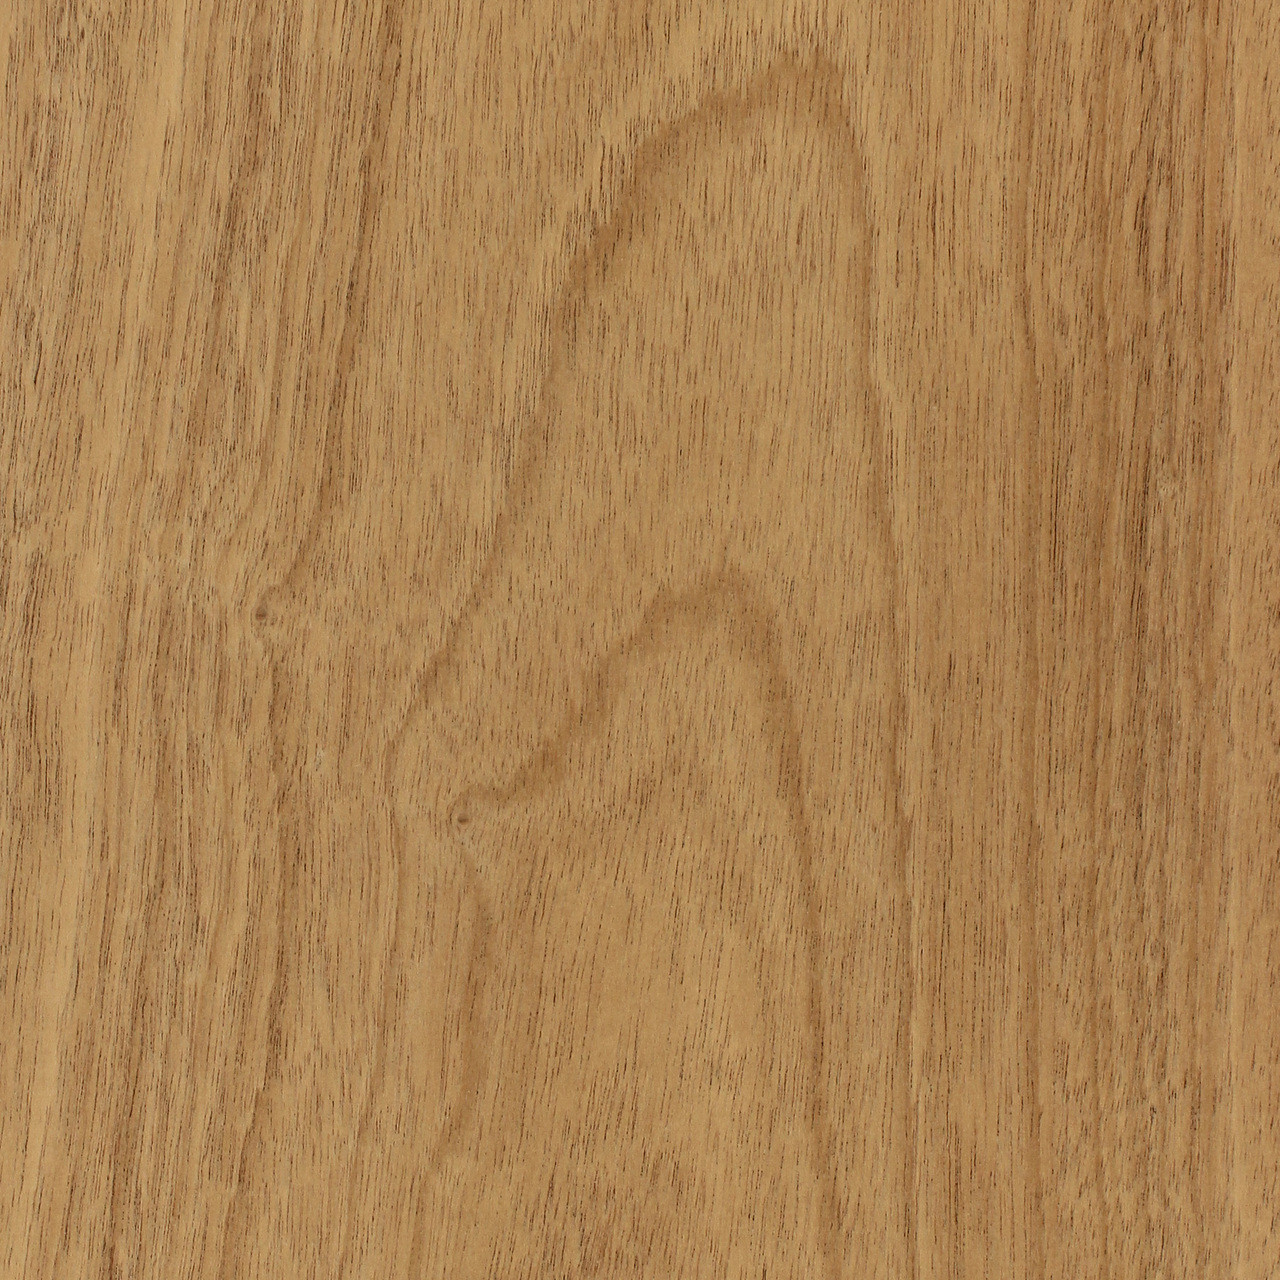 mahogany wood veneer